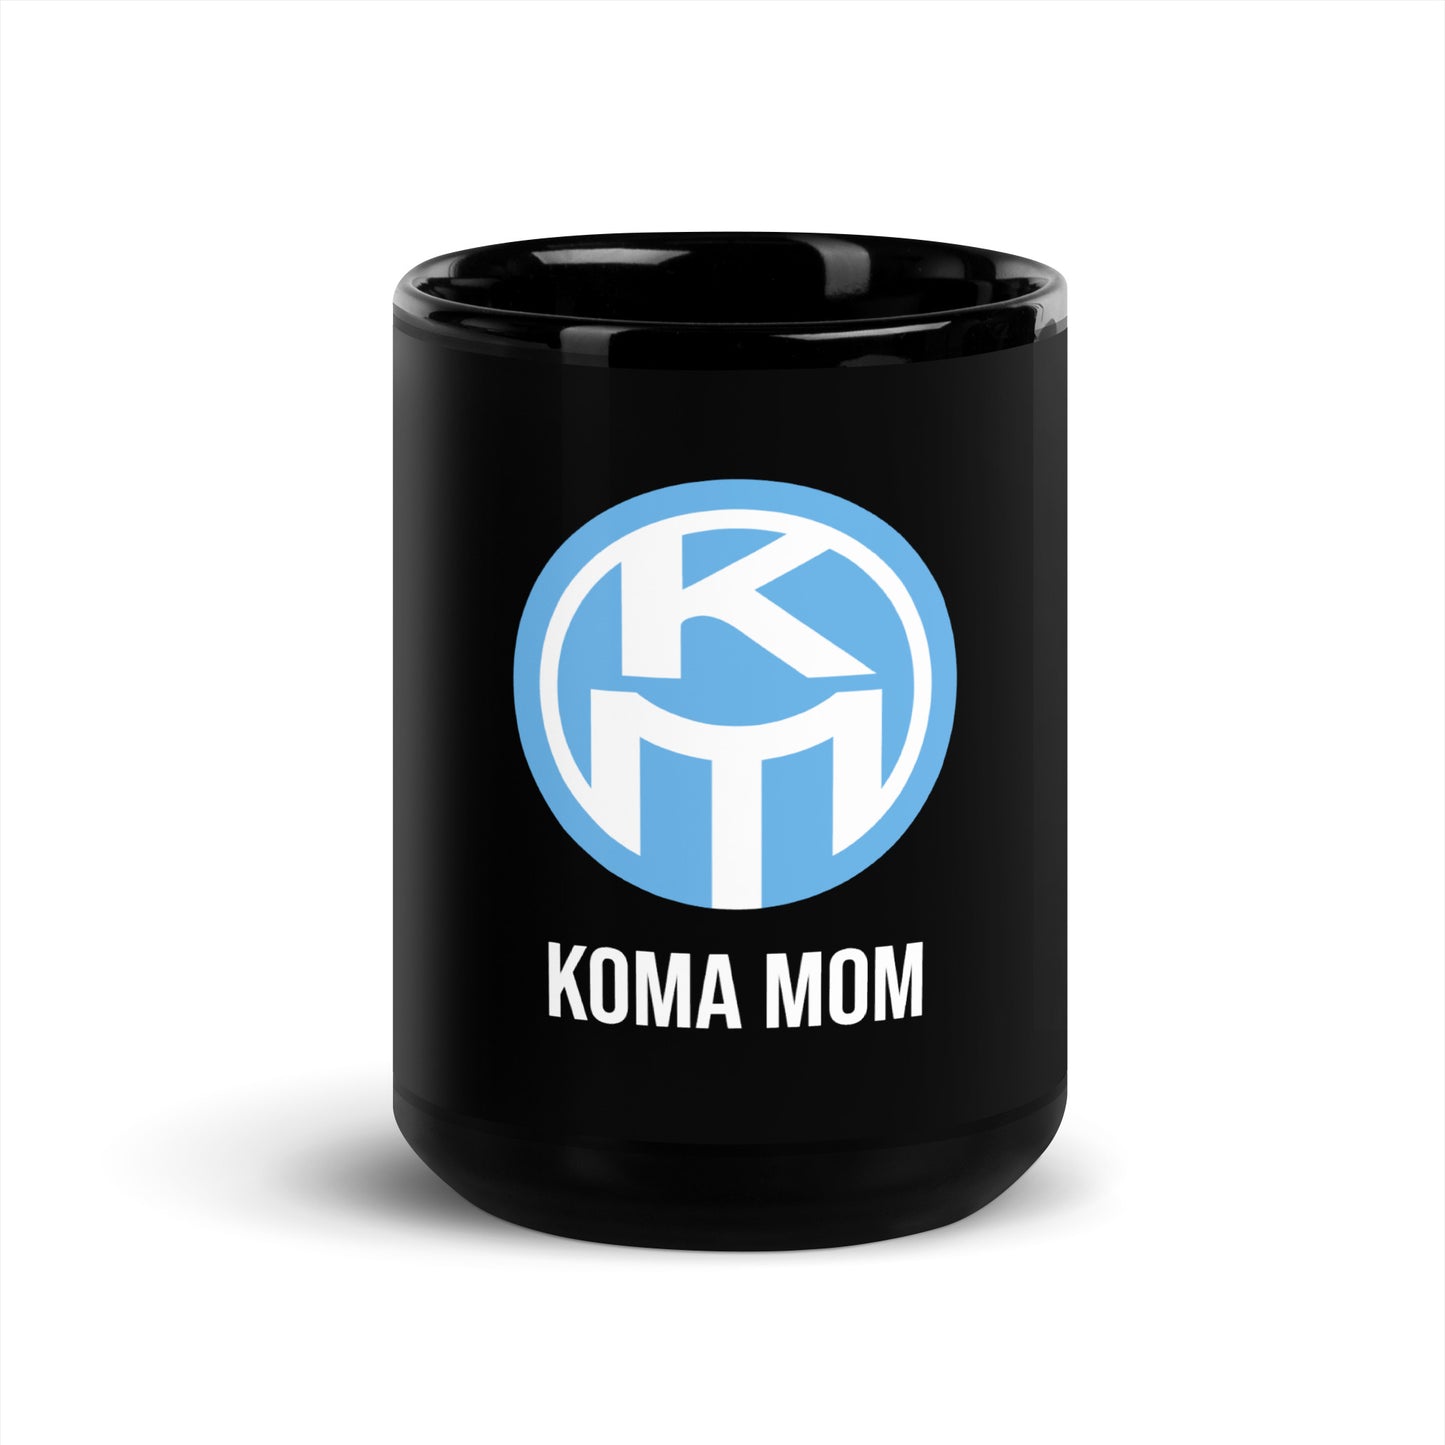 KOMA Mom Mug